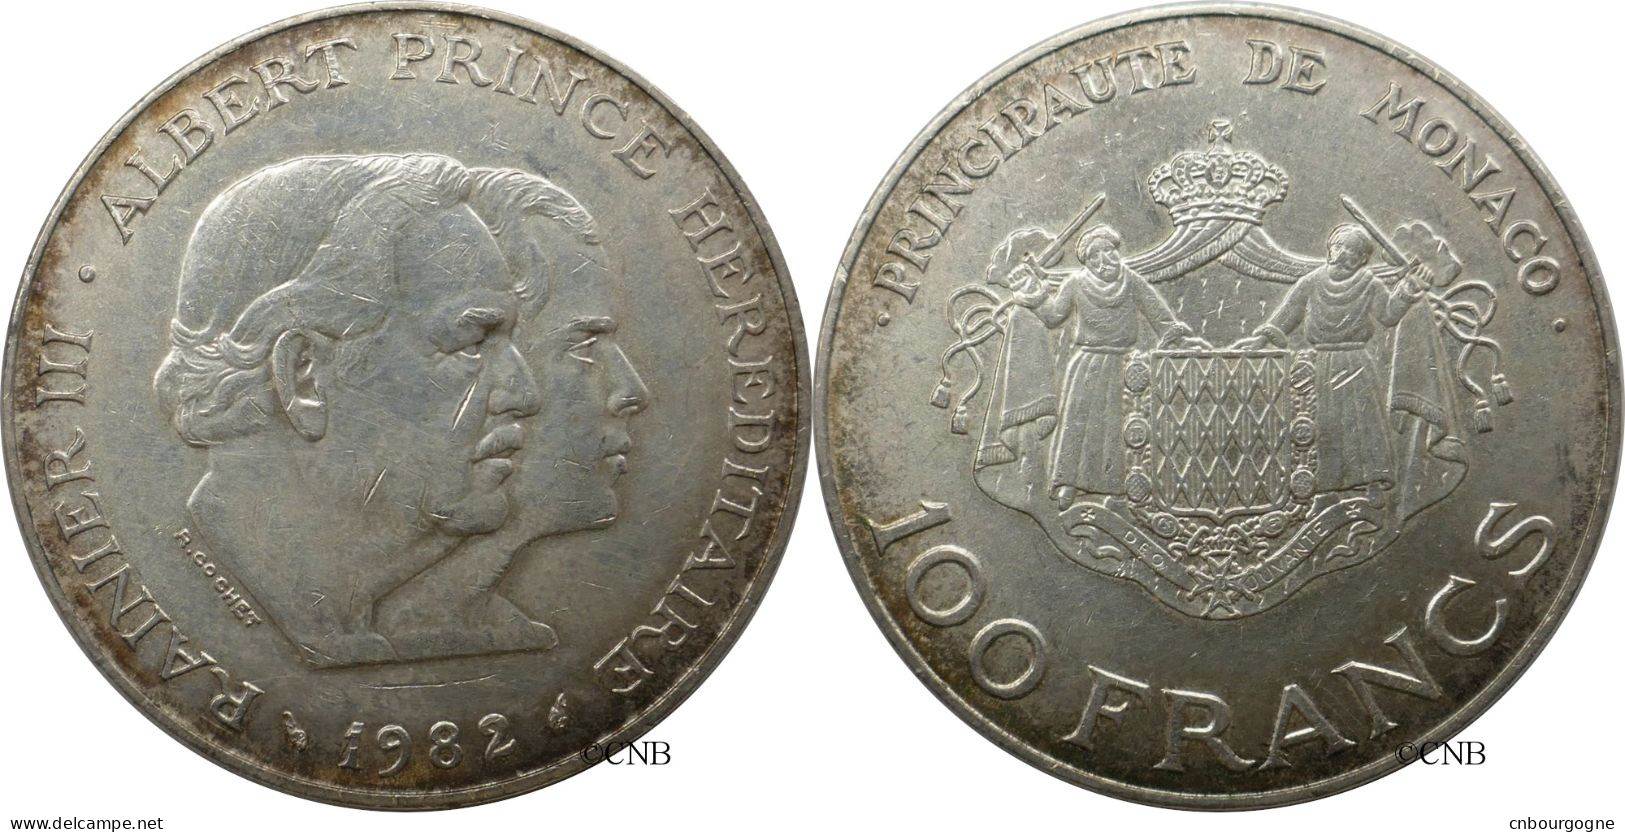 Monaco - Principauté - Rainier III - 100 Francs 1982 - TTB+/AU50 - Mon6790 - 1960-2001 Francos Nuevos